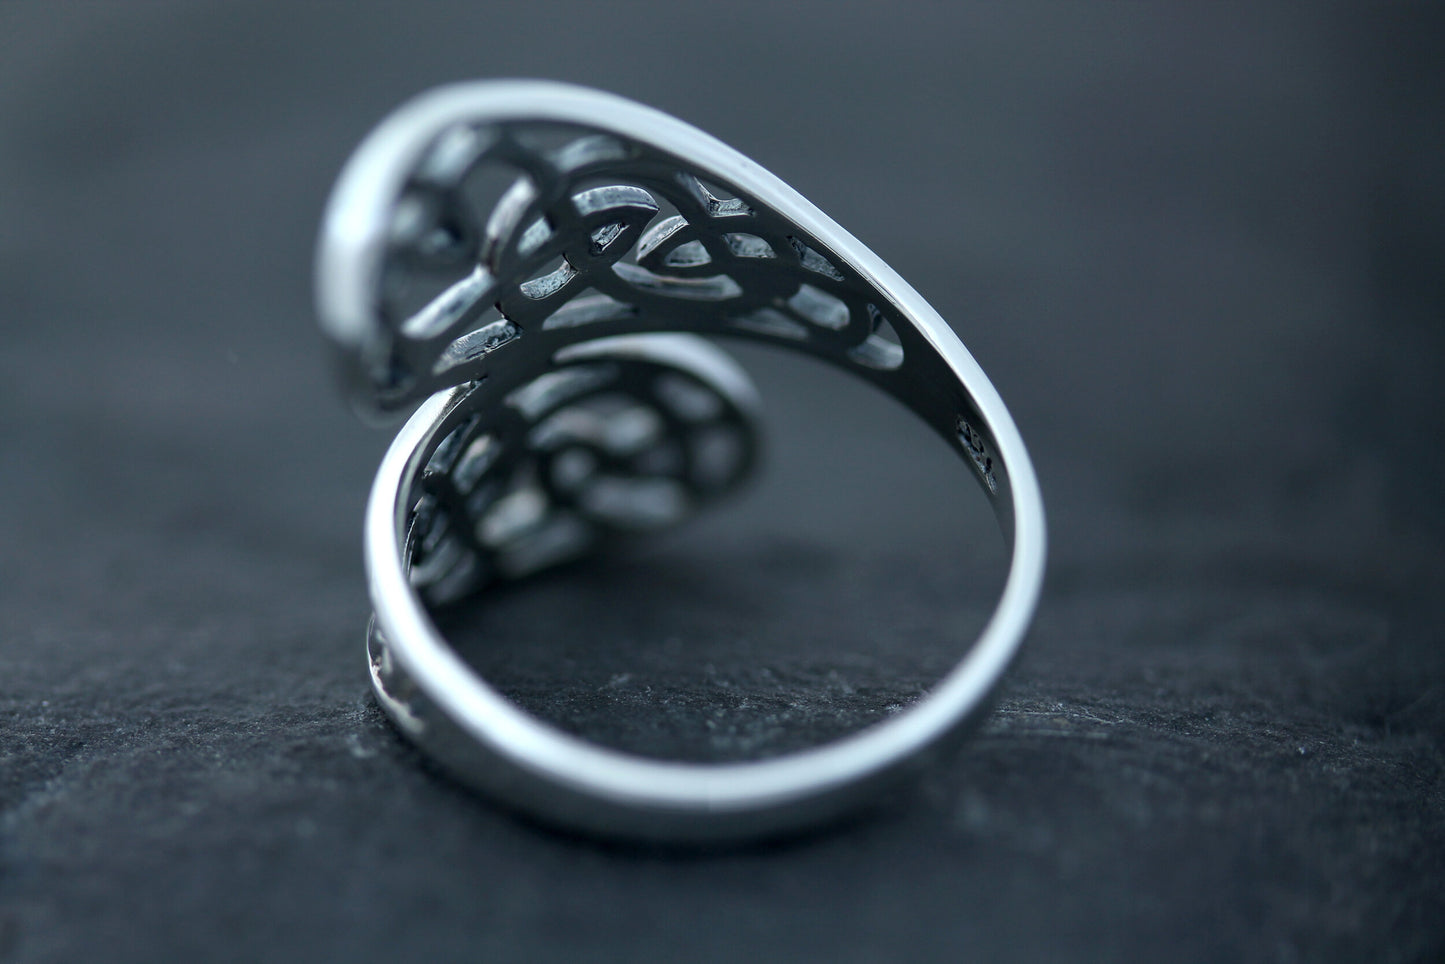 Celtic Knot Ring - Celtic Embrace